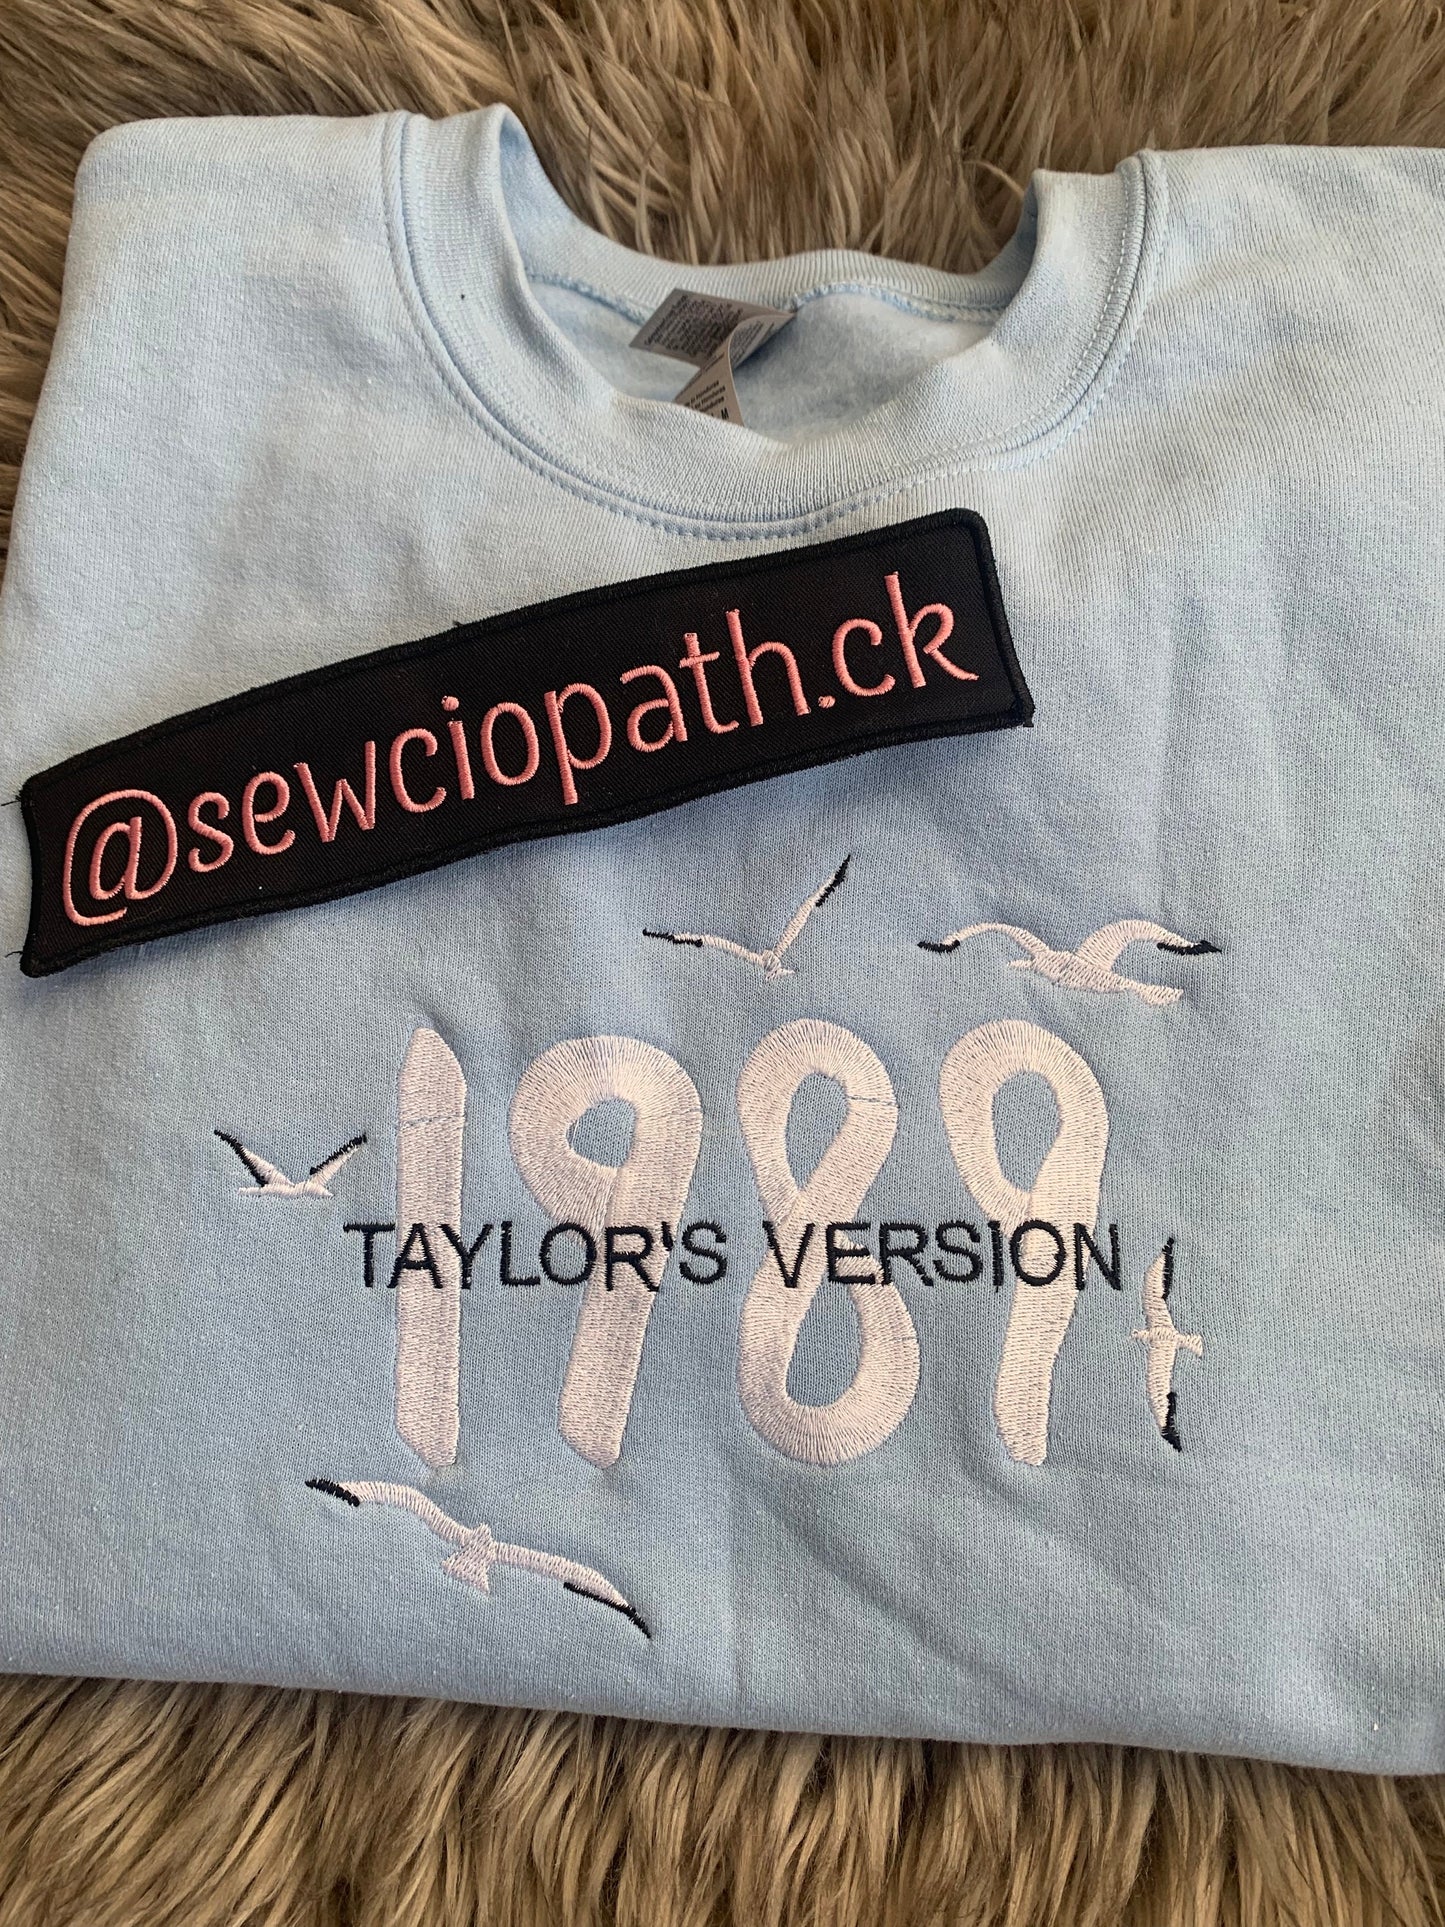 1989 Taylor's Version Sweatshirt